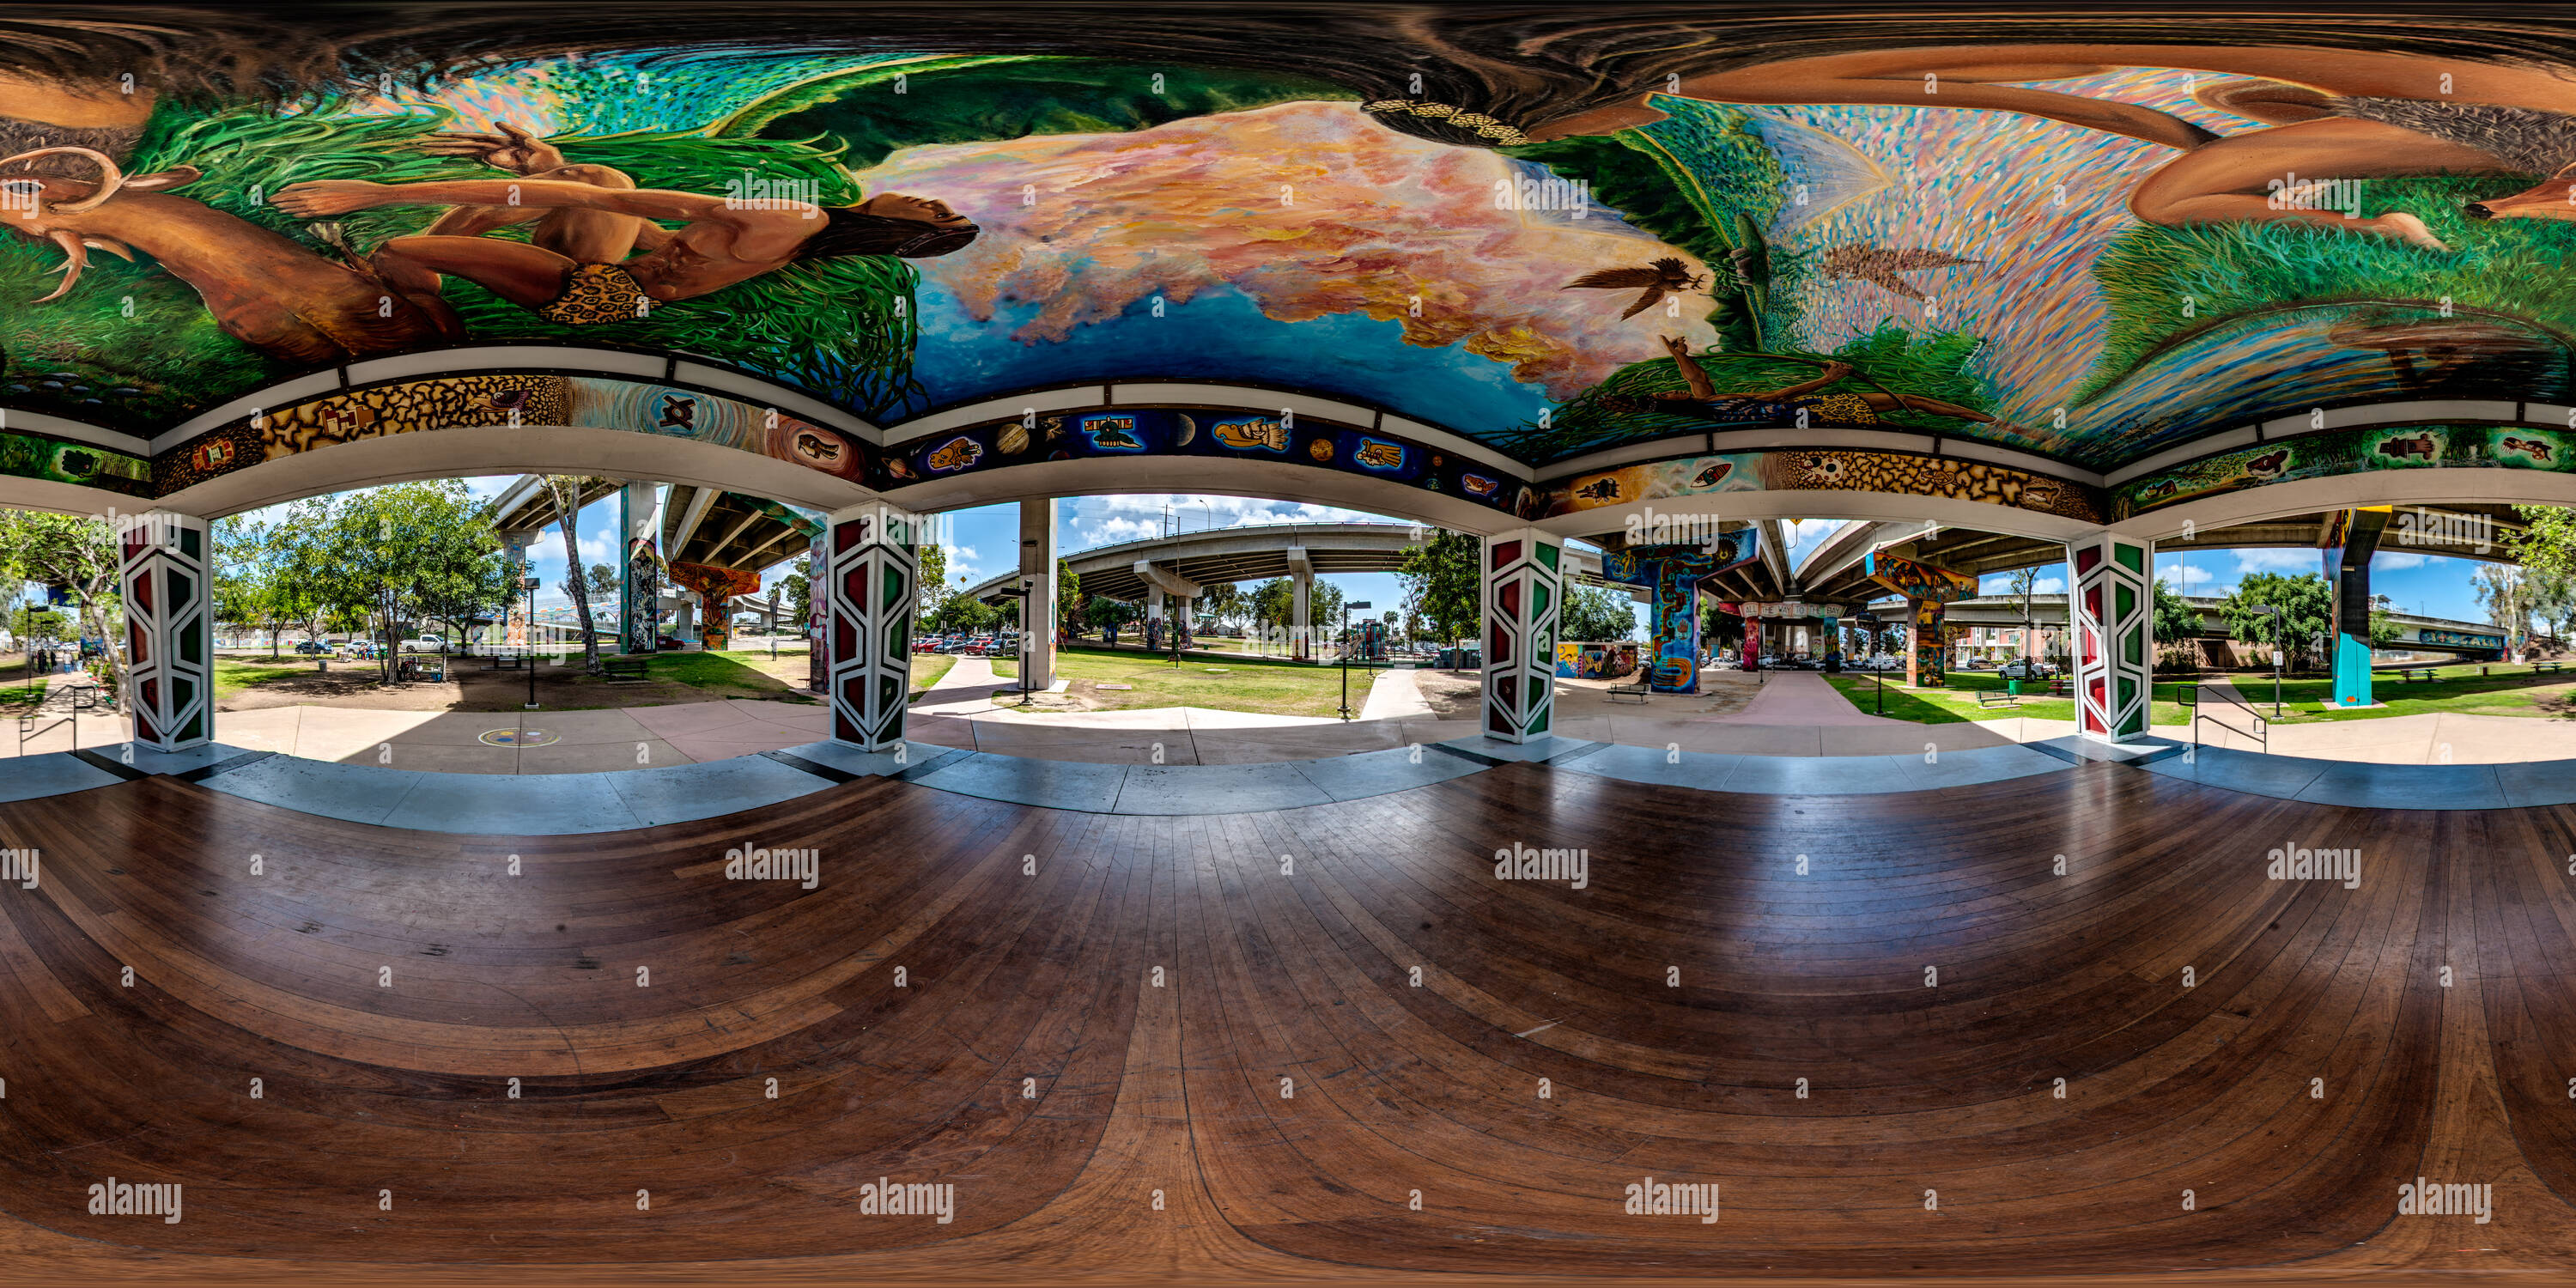 360 degree panoramic view of The Kiosko at Chicano Park